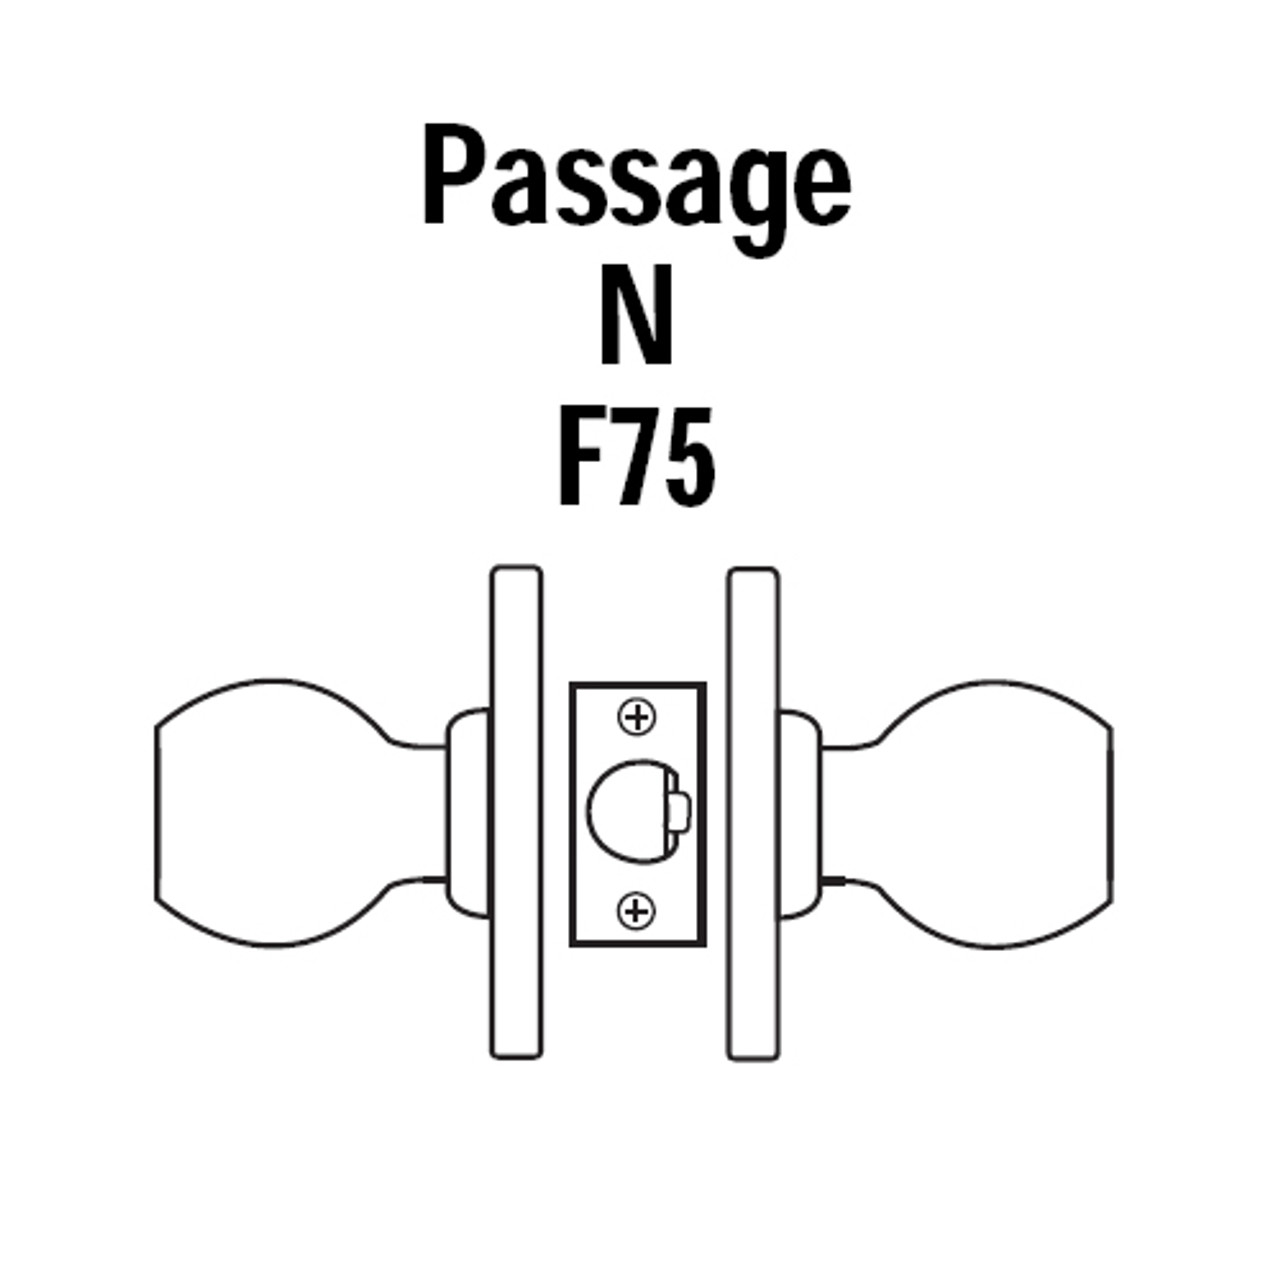 8K30N4DS3606 Best 8K Series Passage Heavy Duty Cylindrical Knob Locks with Round Style in Satin Brass